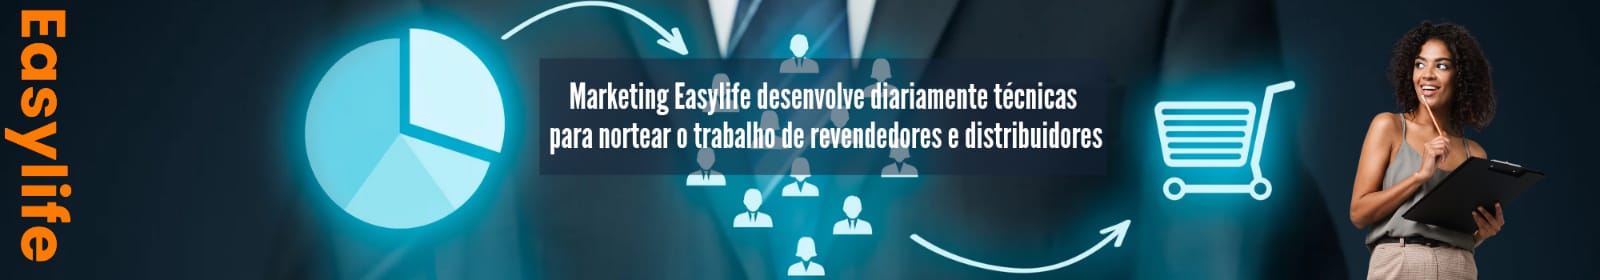 Marketing Easylife desenvolve diariamente técnicas para nortear o trabalho de revendedores e distribuidores